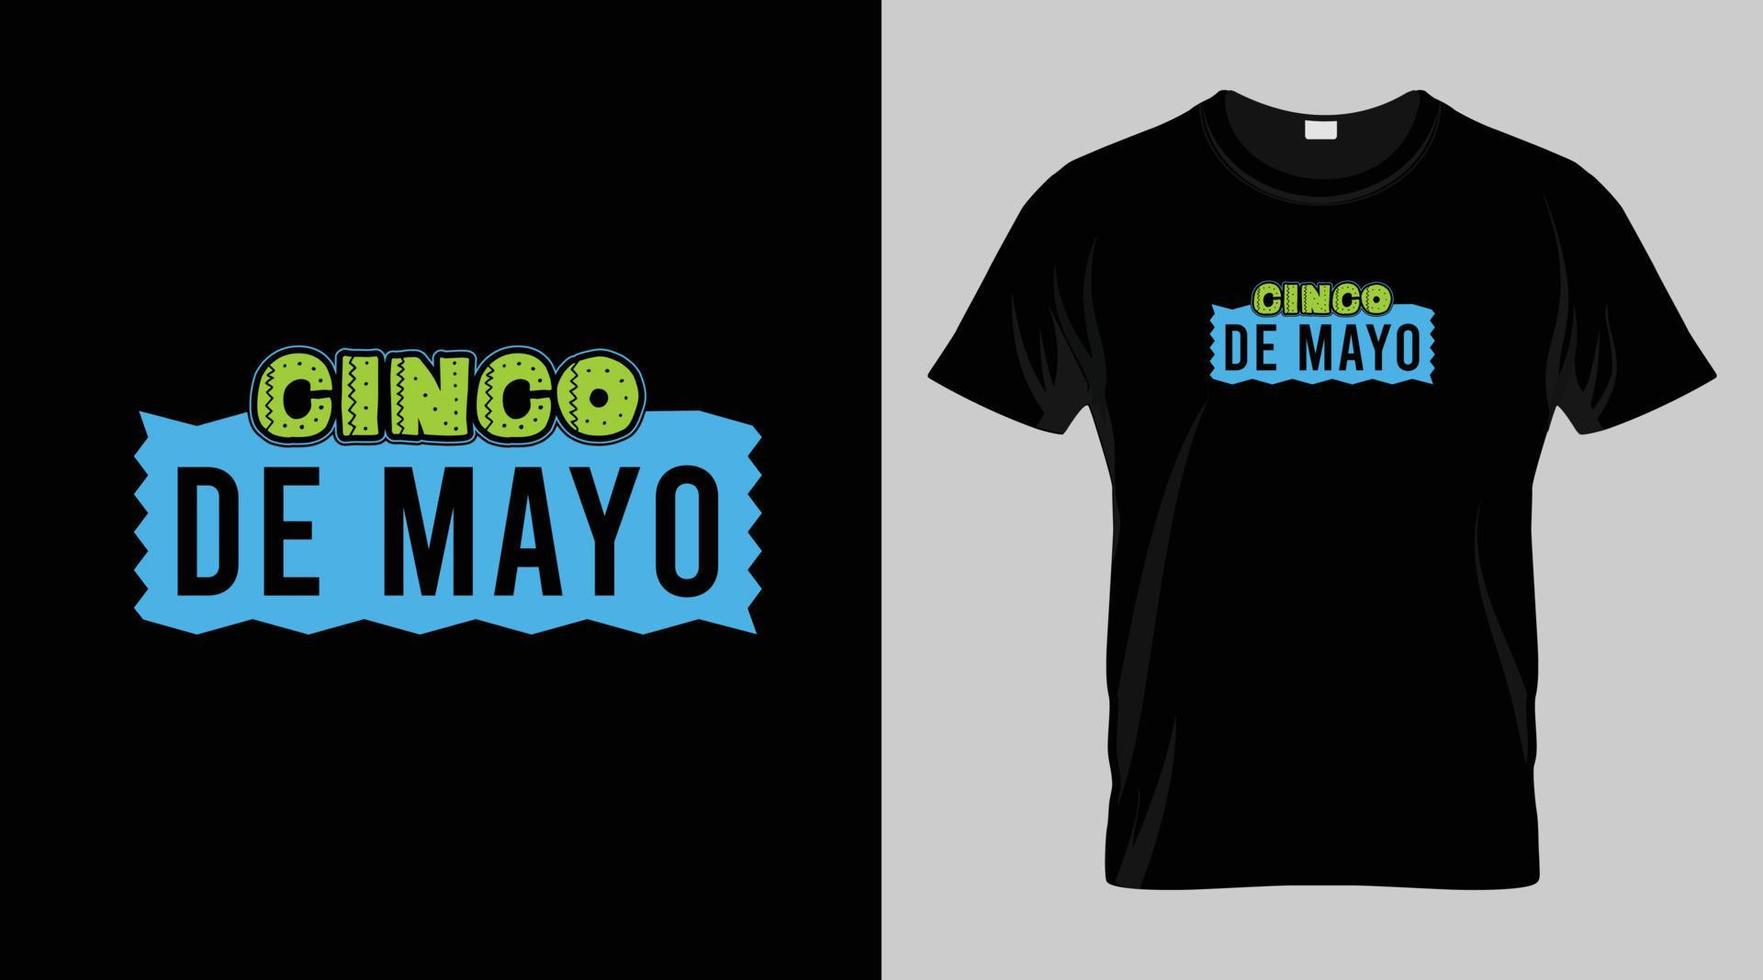 Cinco de mayo festival t-shirt design, mexican festival vector t-shirt design